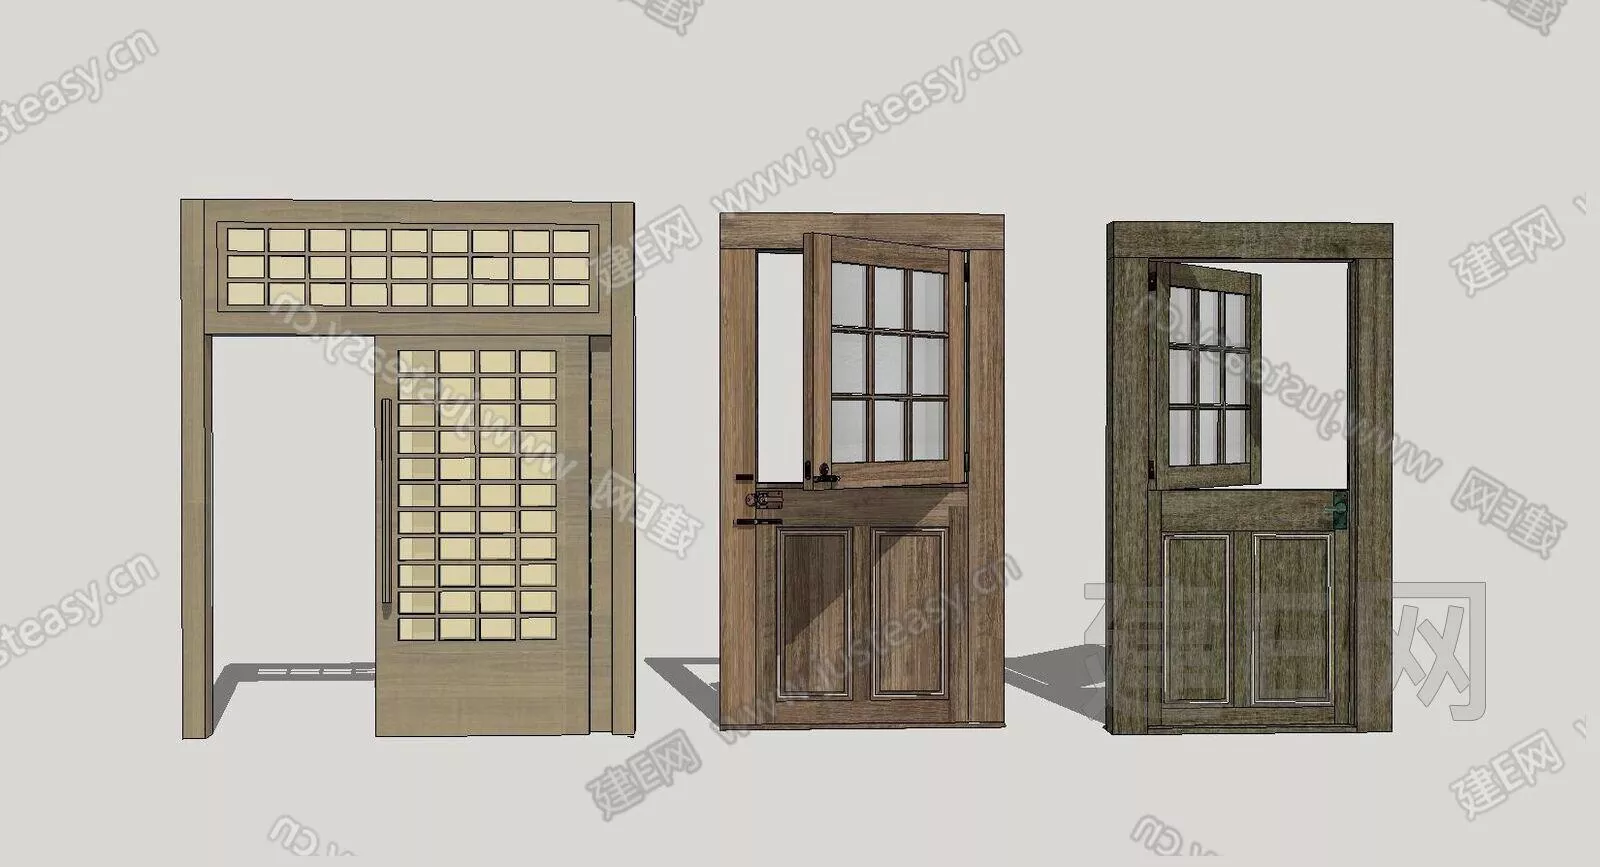 JAPANESE DOOR AND WINDOWS - SKETCHUP 3D MODEL - ENSCAPE - 105726042